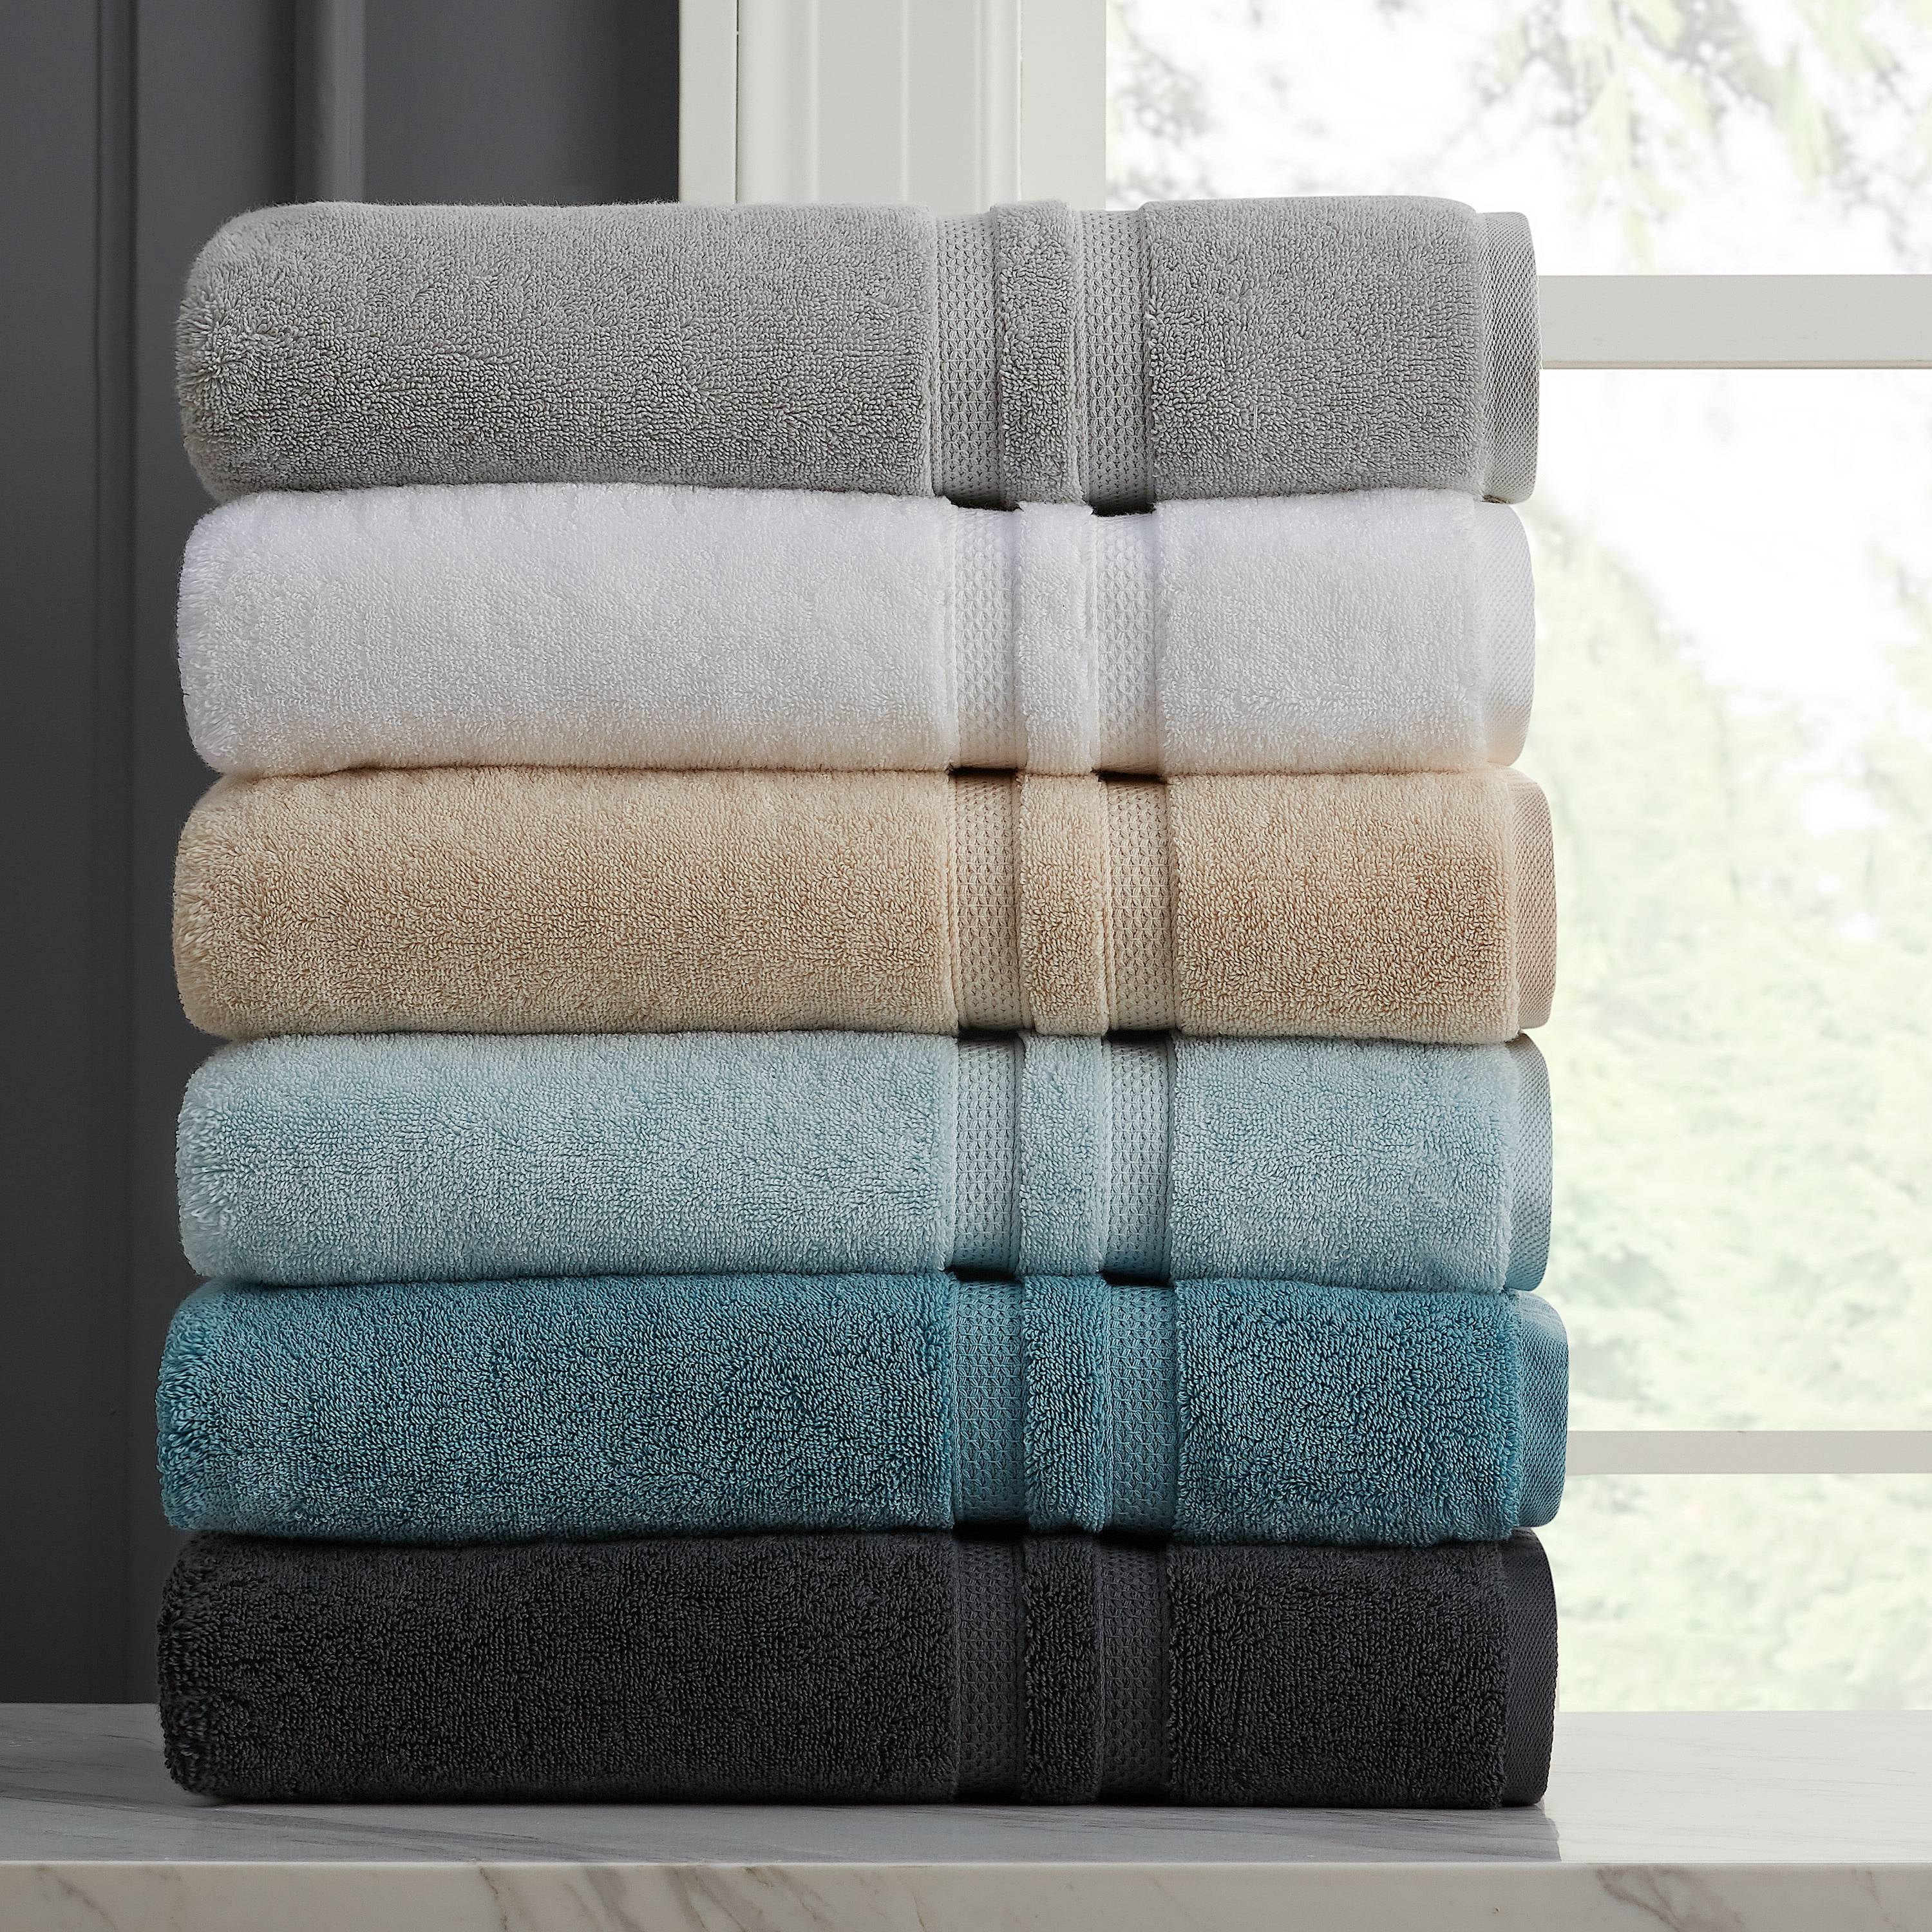 Bath Towel 3 Pieces Set Bathroom Spa Swimming Towels 60% Cotton Luxurious Towels